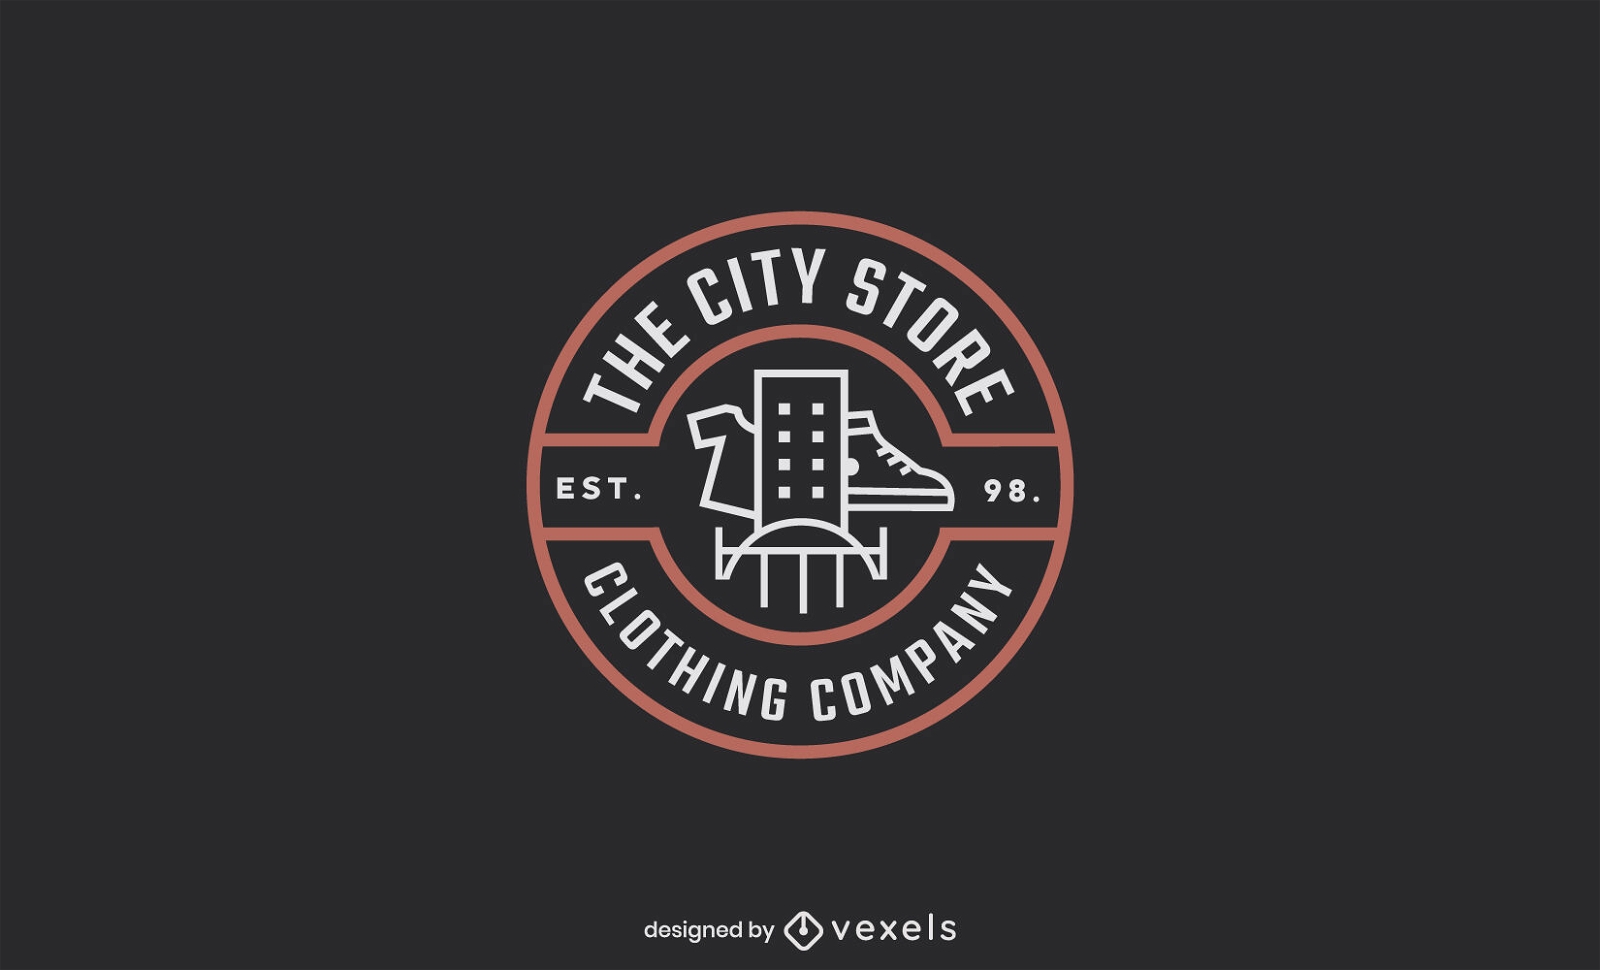 Urban clothes business logo design